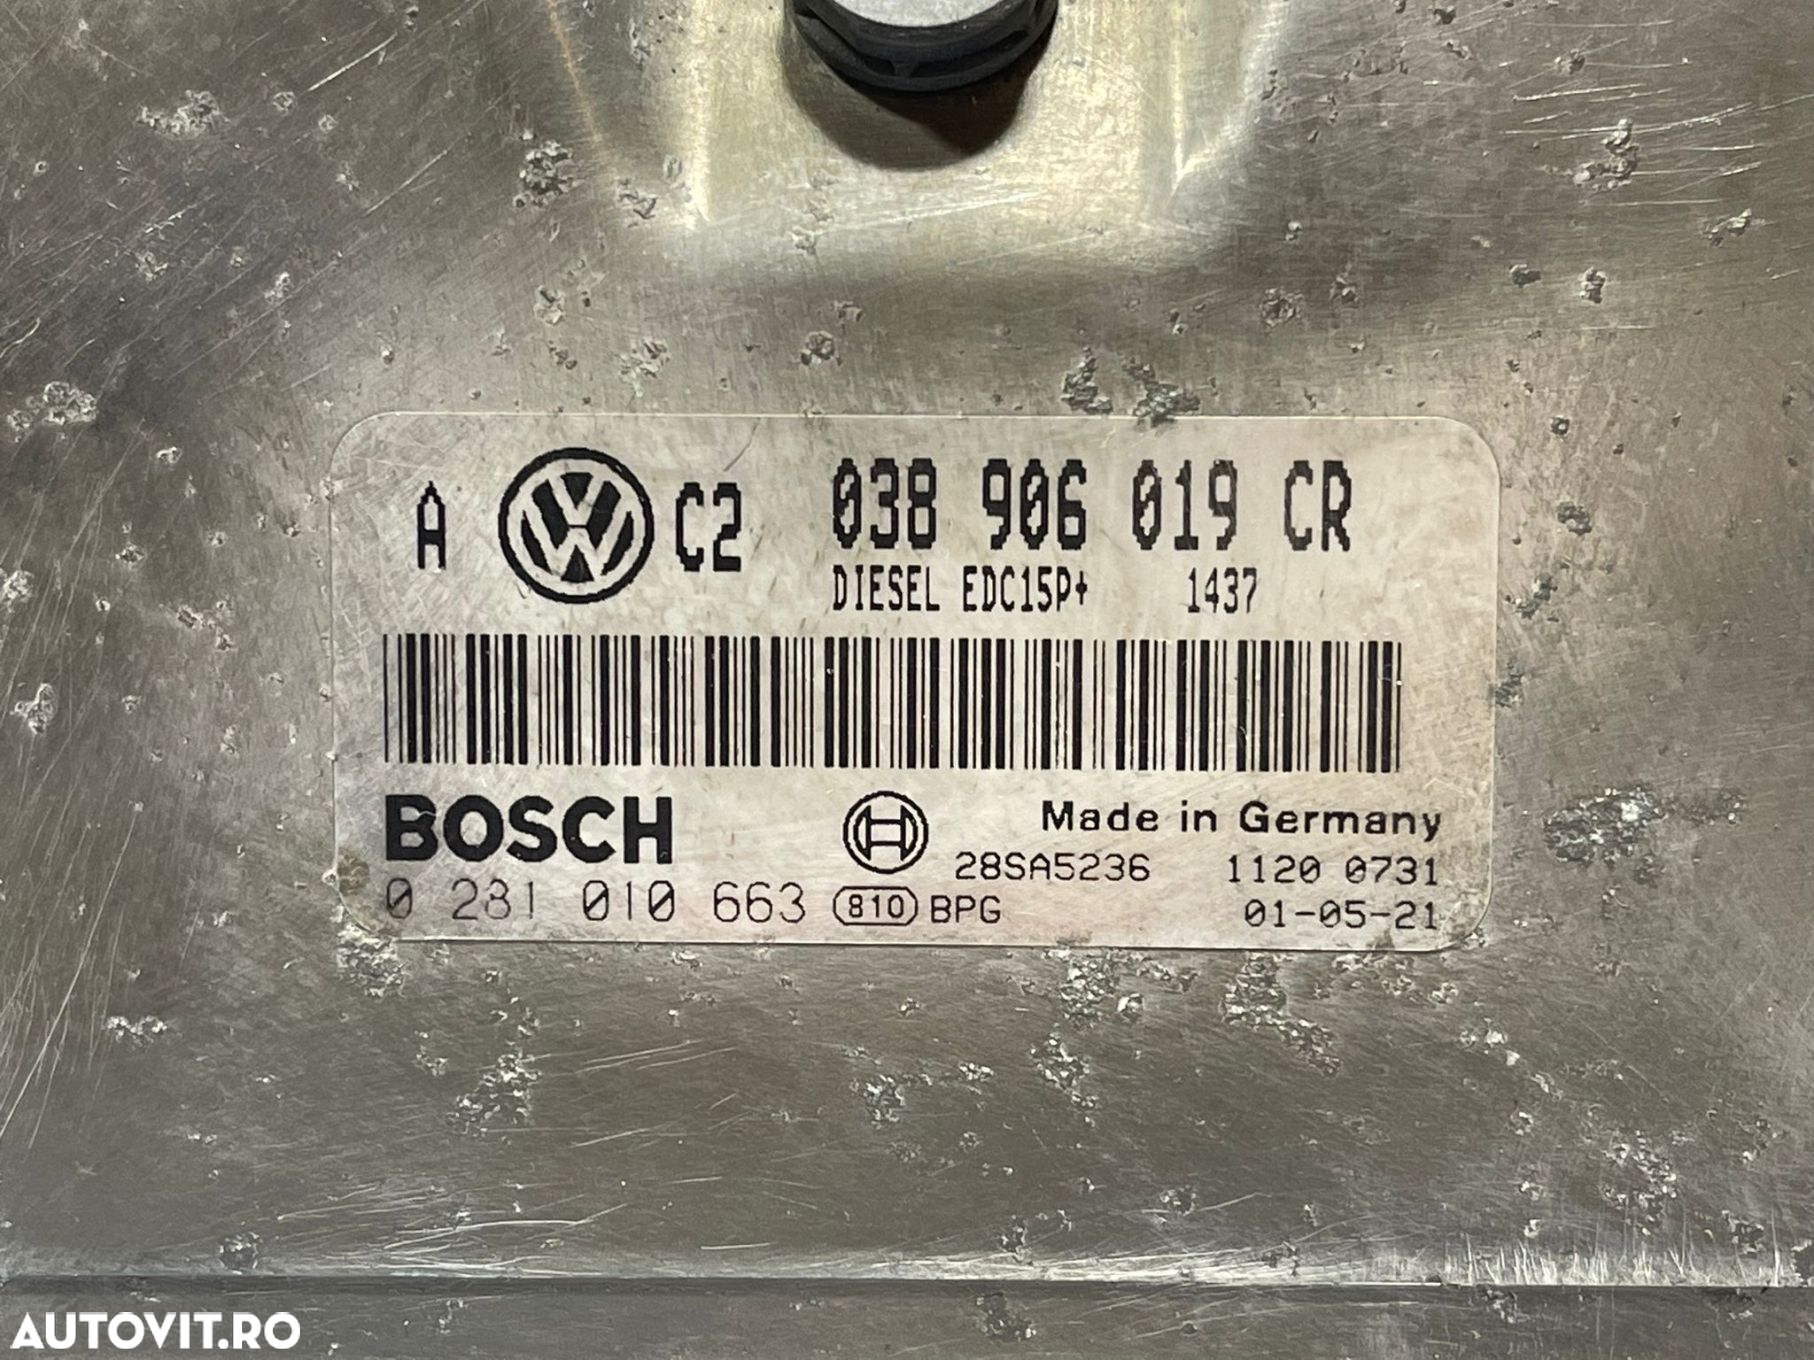 ECU Calculator Motor Volkswagen Golf 4 1.9 TDI AXR 1998 - 2006 Cod 038906019CR 0281010663 - 2